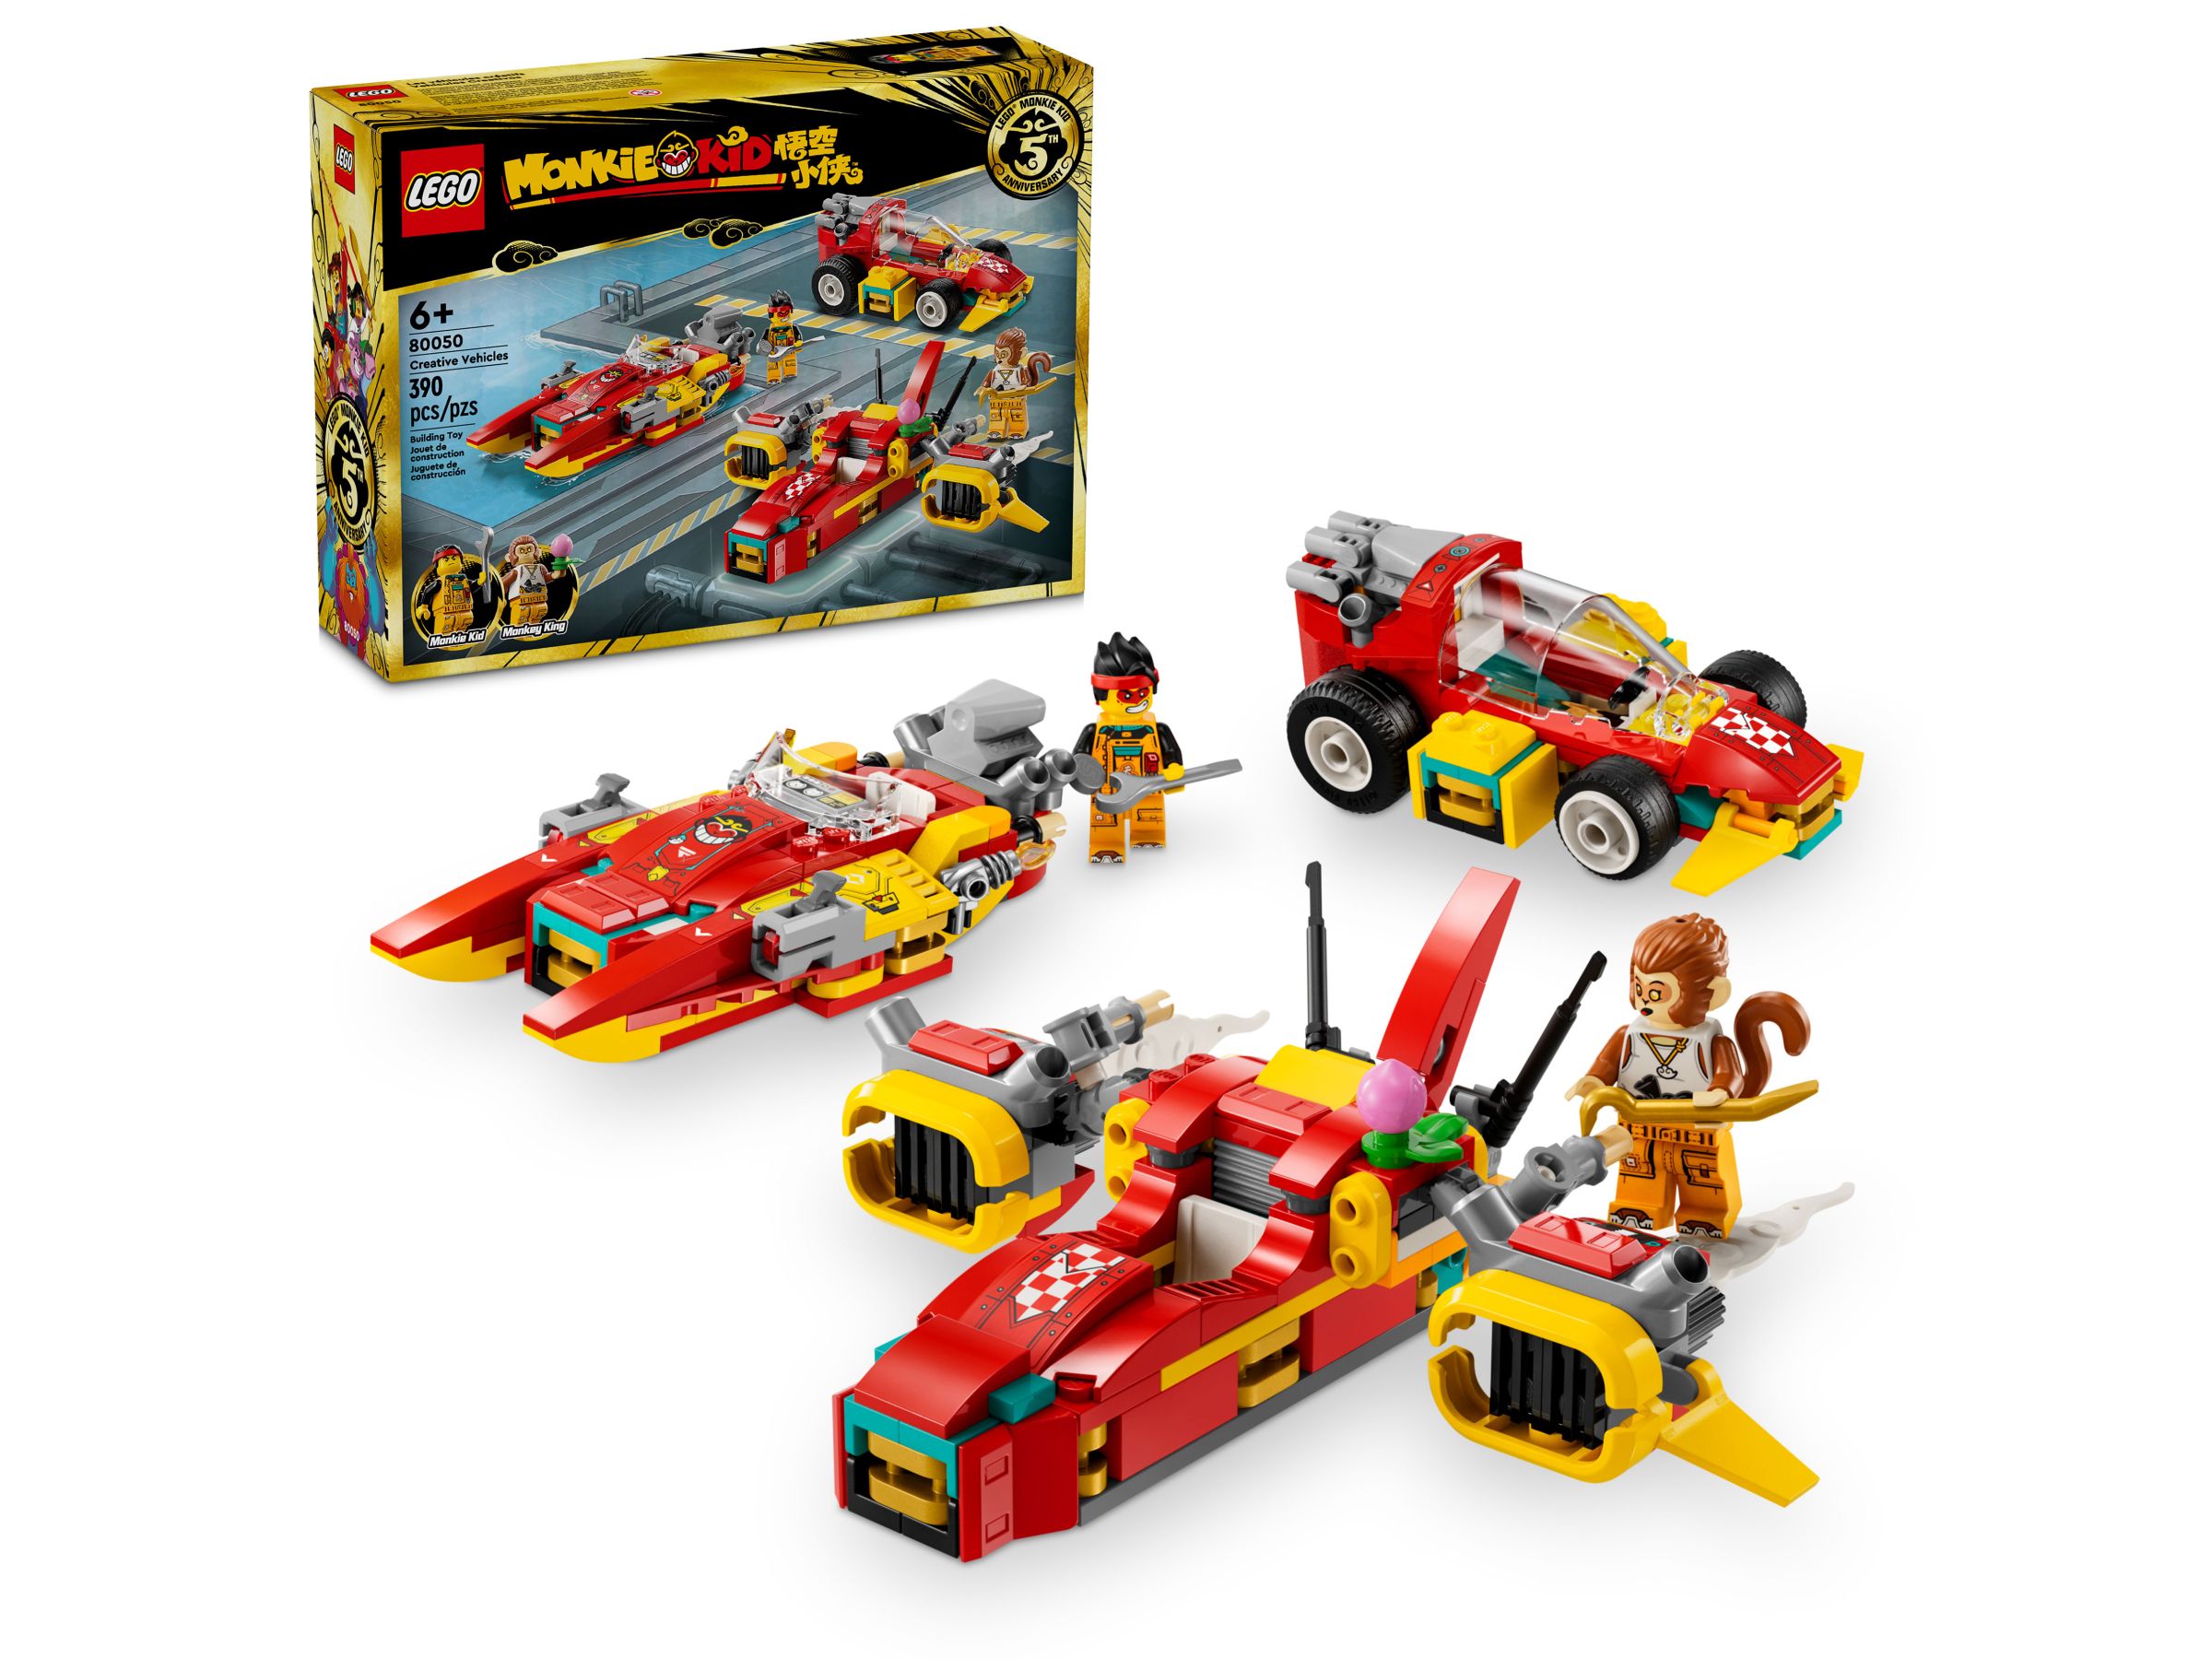 LEGO Monkie Kid 80050 Kreative Fahrzeuge LEGO_80050_alt1.jpg